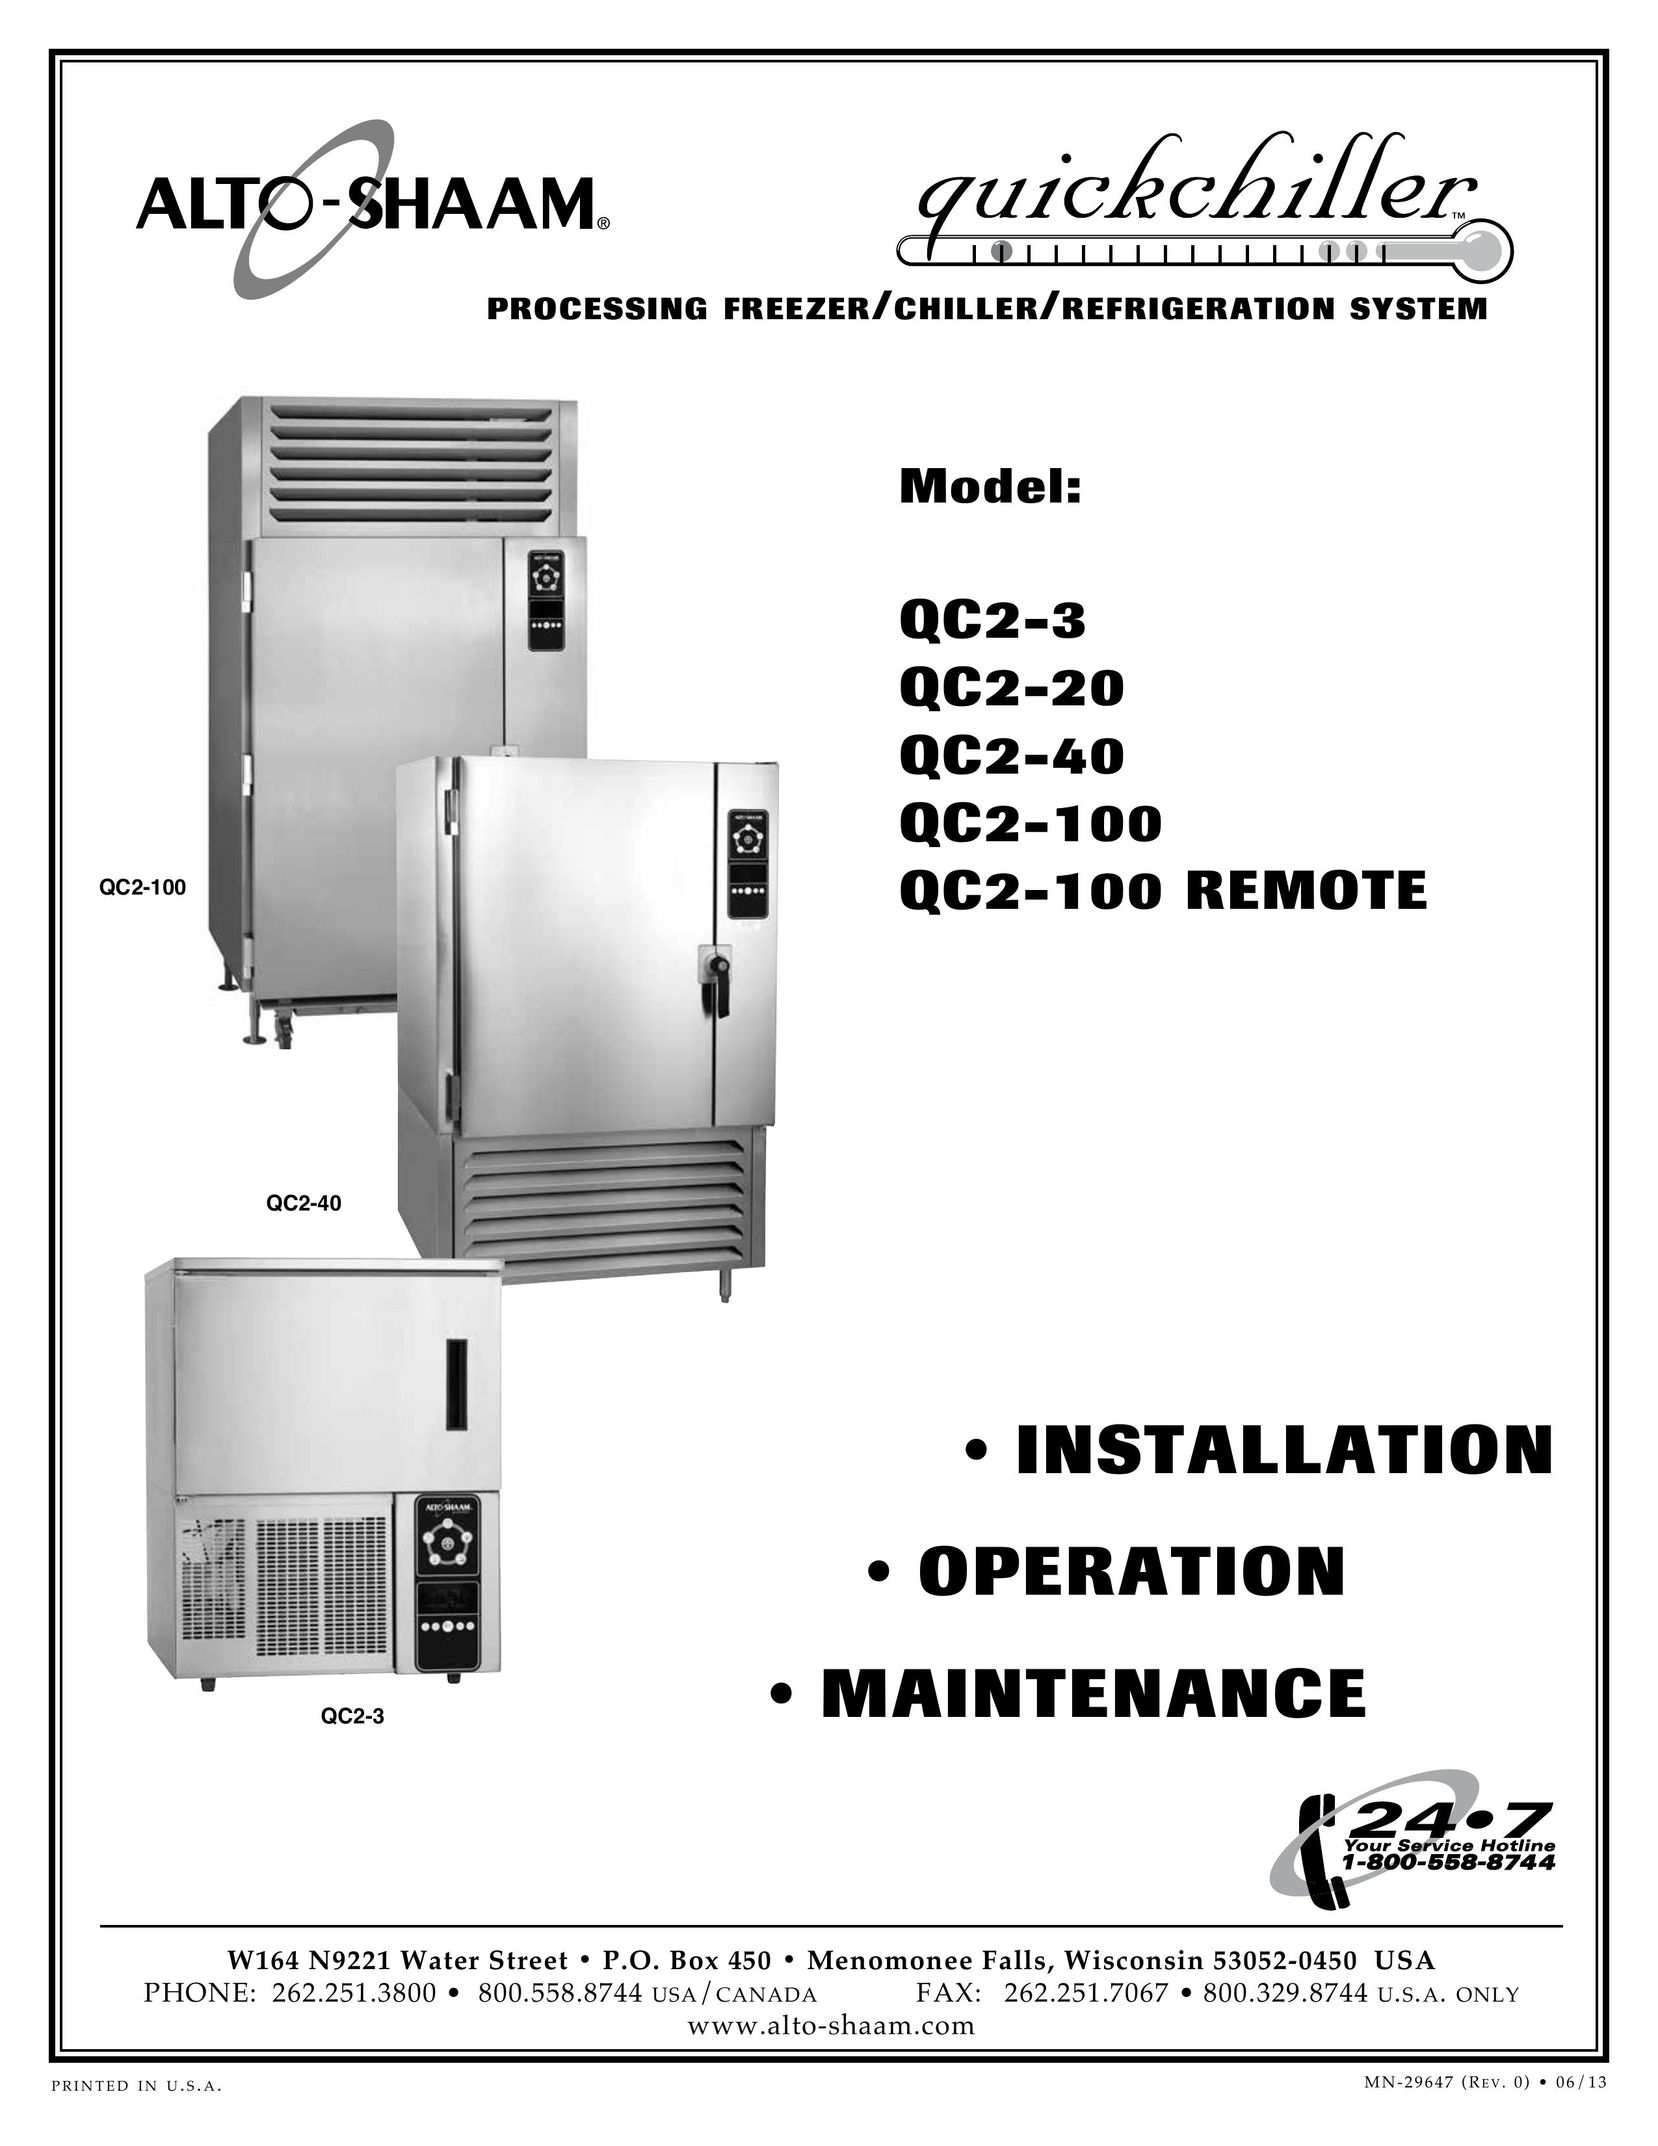 Alto-Shaam QC2-100 REMOTE Freezer User Manual